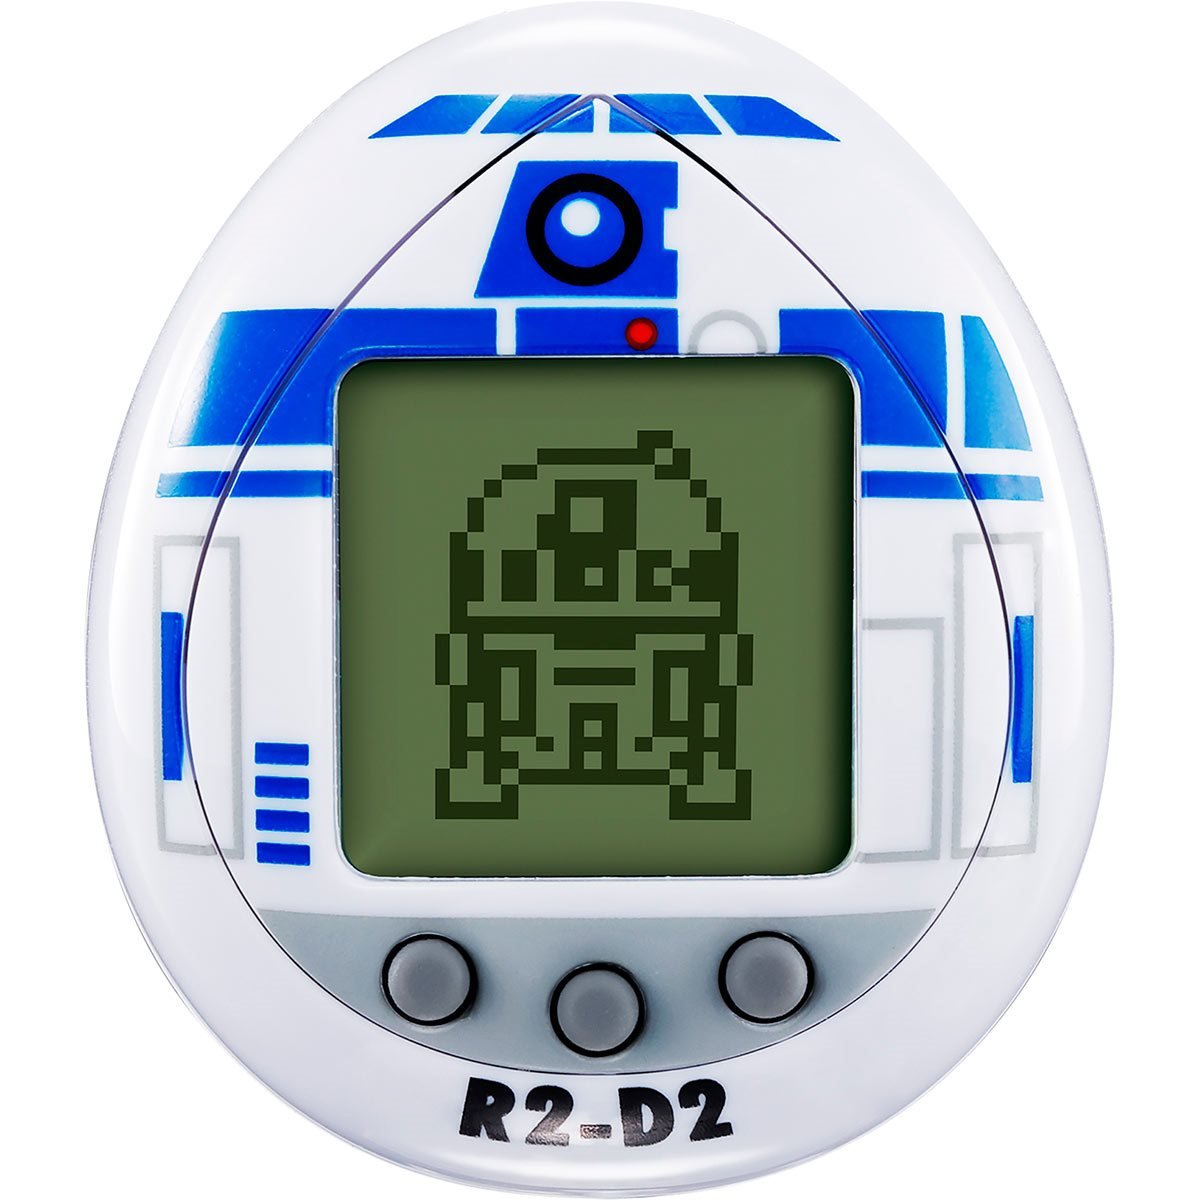 Star Wars Tamagotchi R2-D2 Digital Pet - The Fourth Place